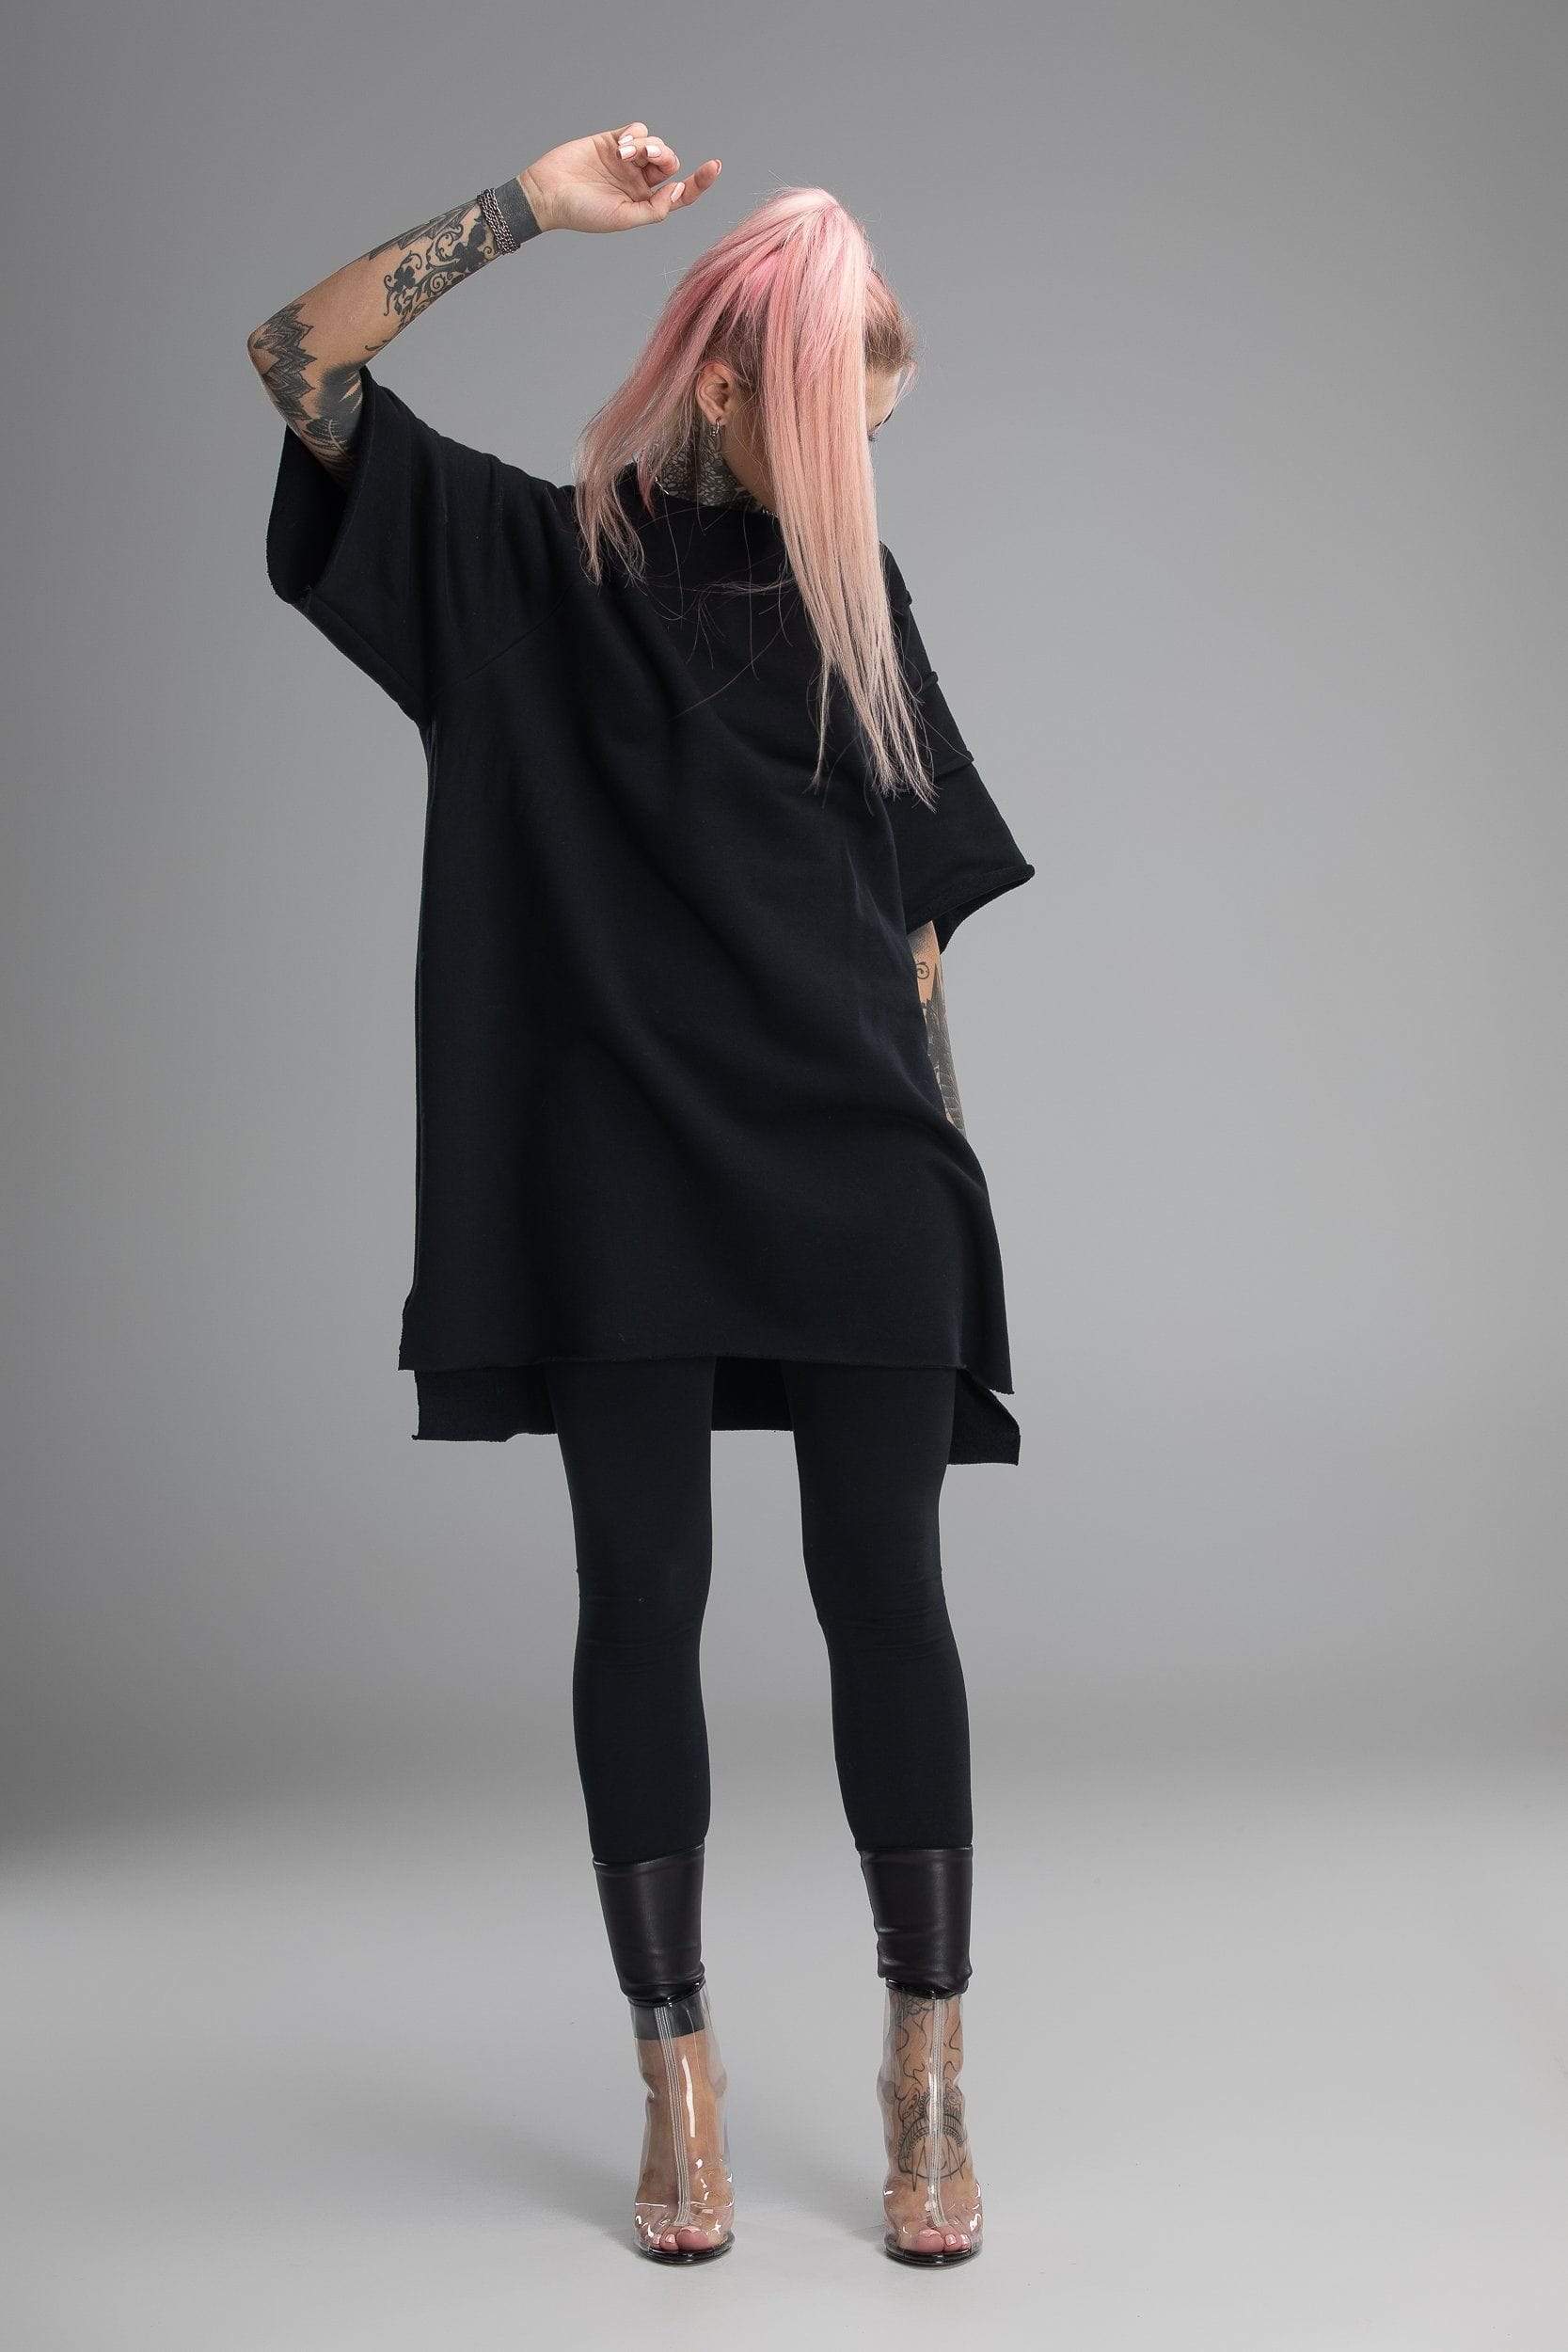 MDNT45 Sweaters, Tunics & Tops Black gothic loose tunic